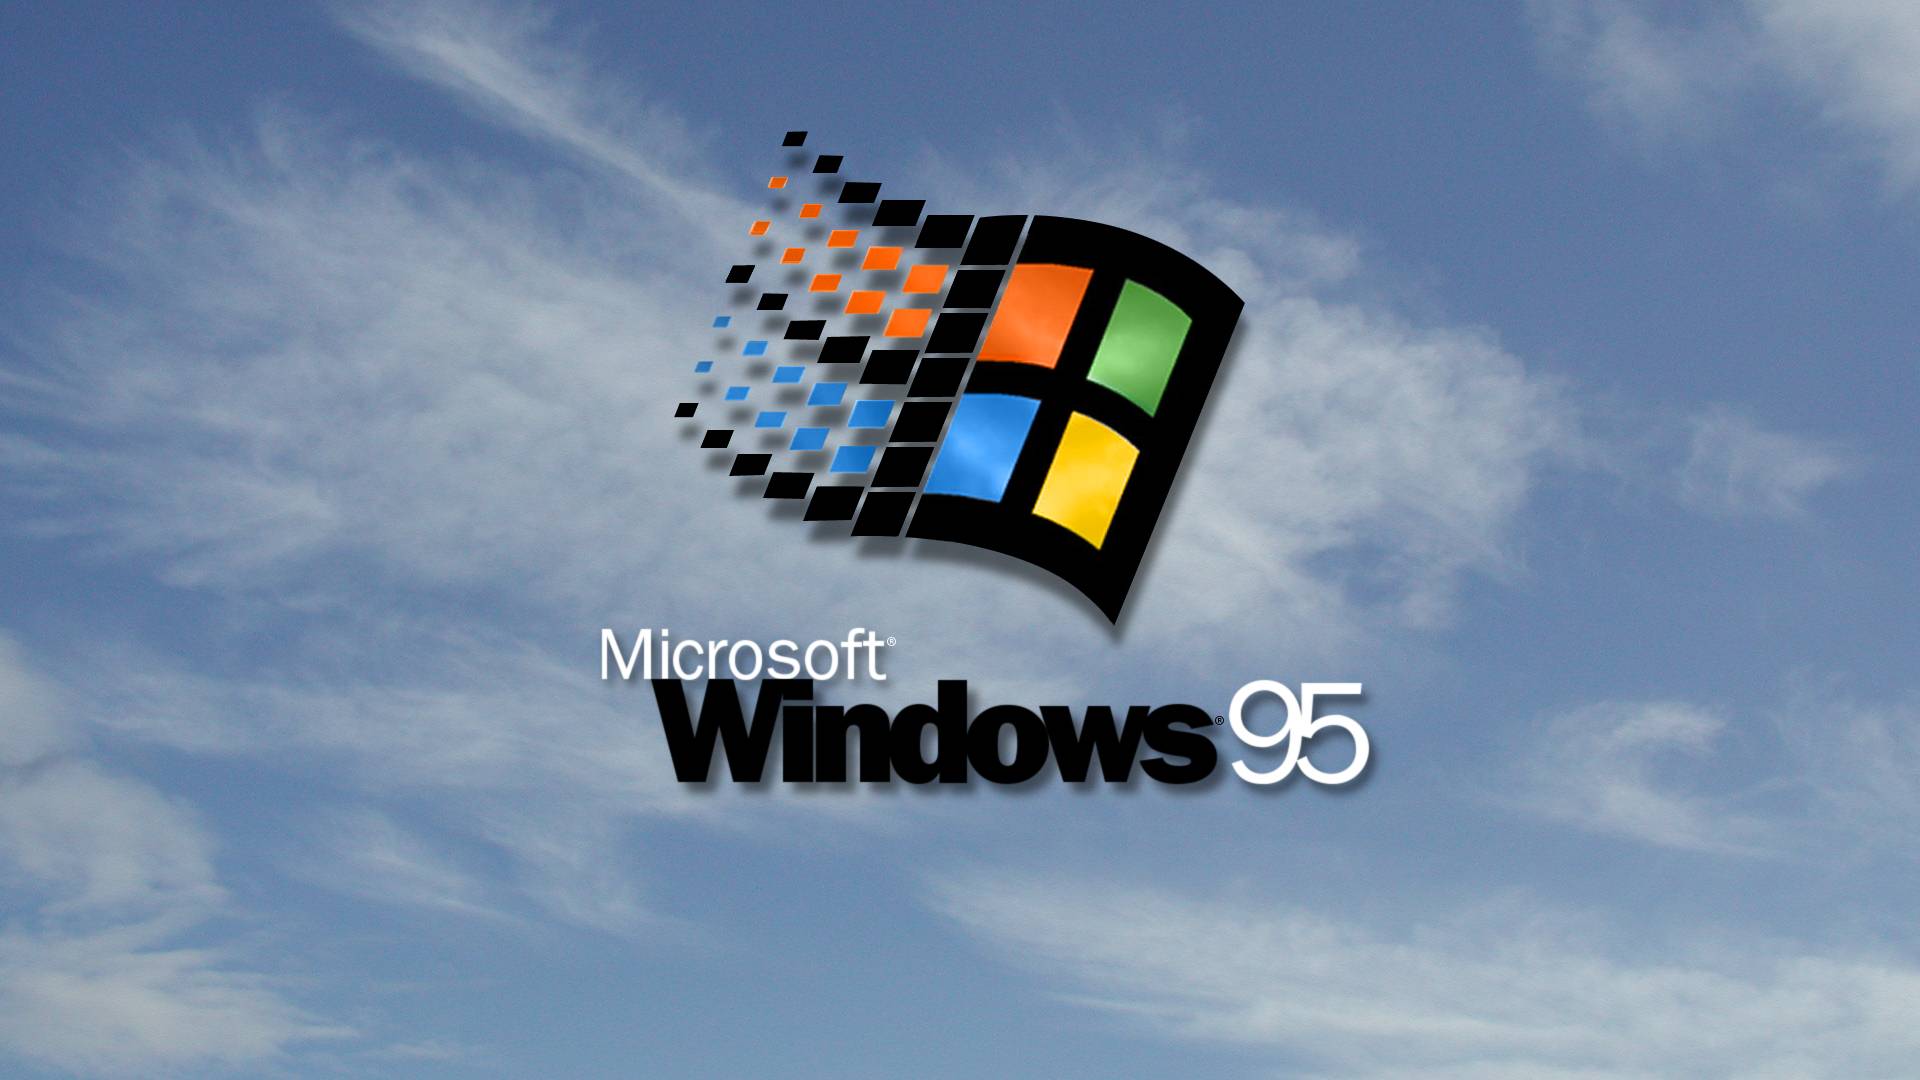 Windows 95 Desktop Backgrounds